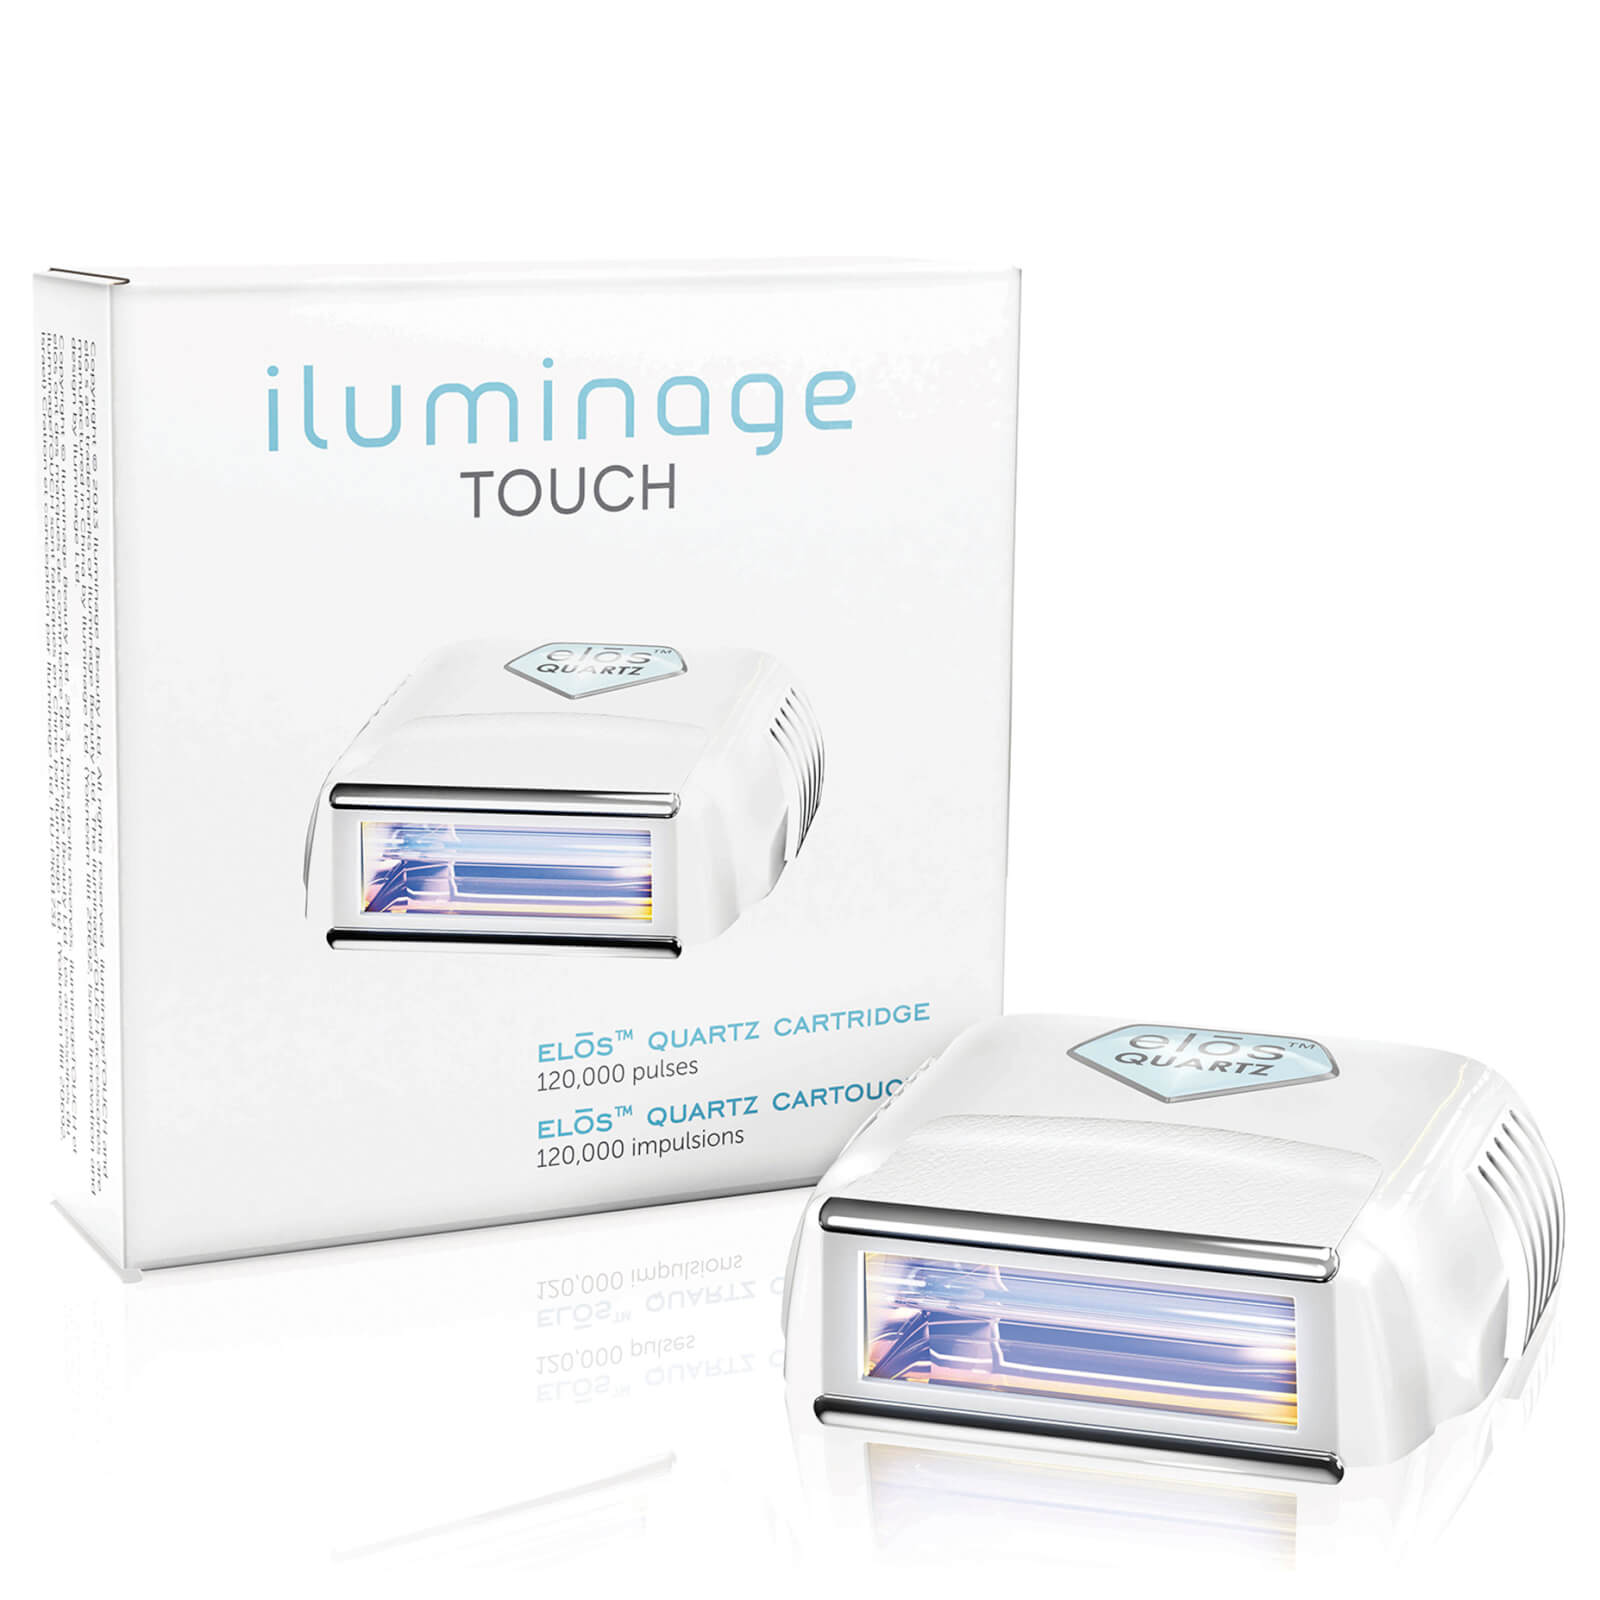 iluminage Touch/mē Smooth Quartz elos Replacement Cartridge (120,000 pulses)